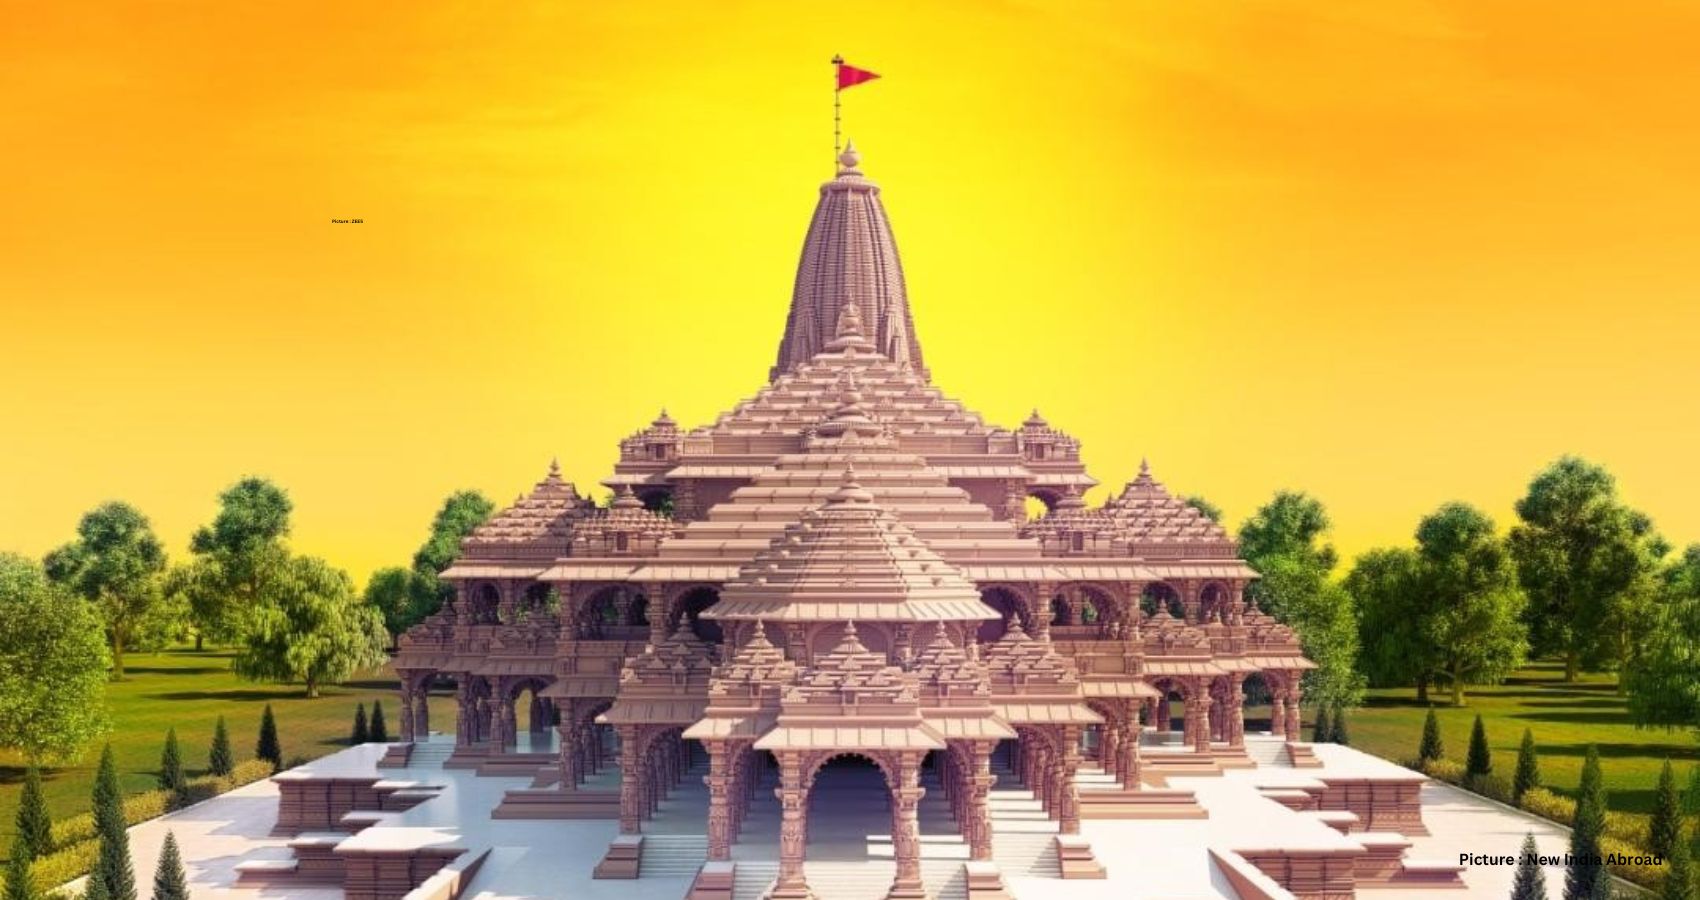 Ayodhya Ram Mandir: Prime Minister Modi to Inaugurate Majestic Temple Amidst Green Oasis